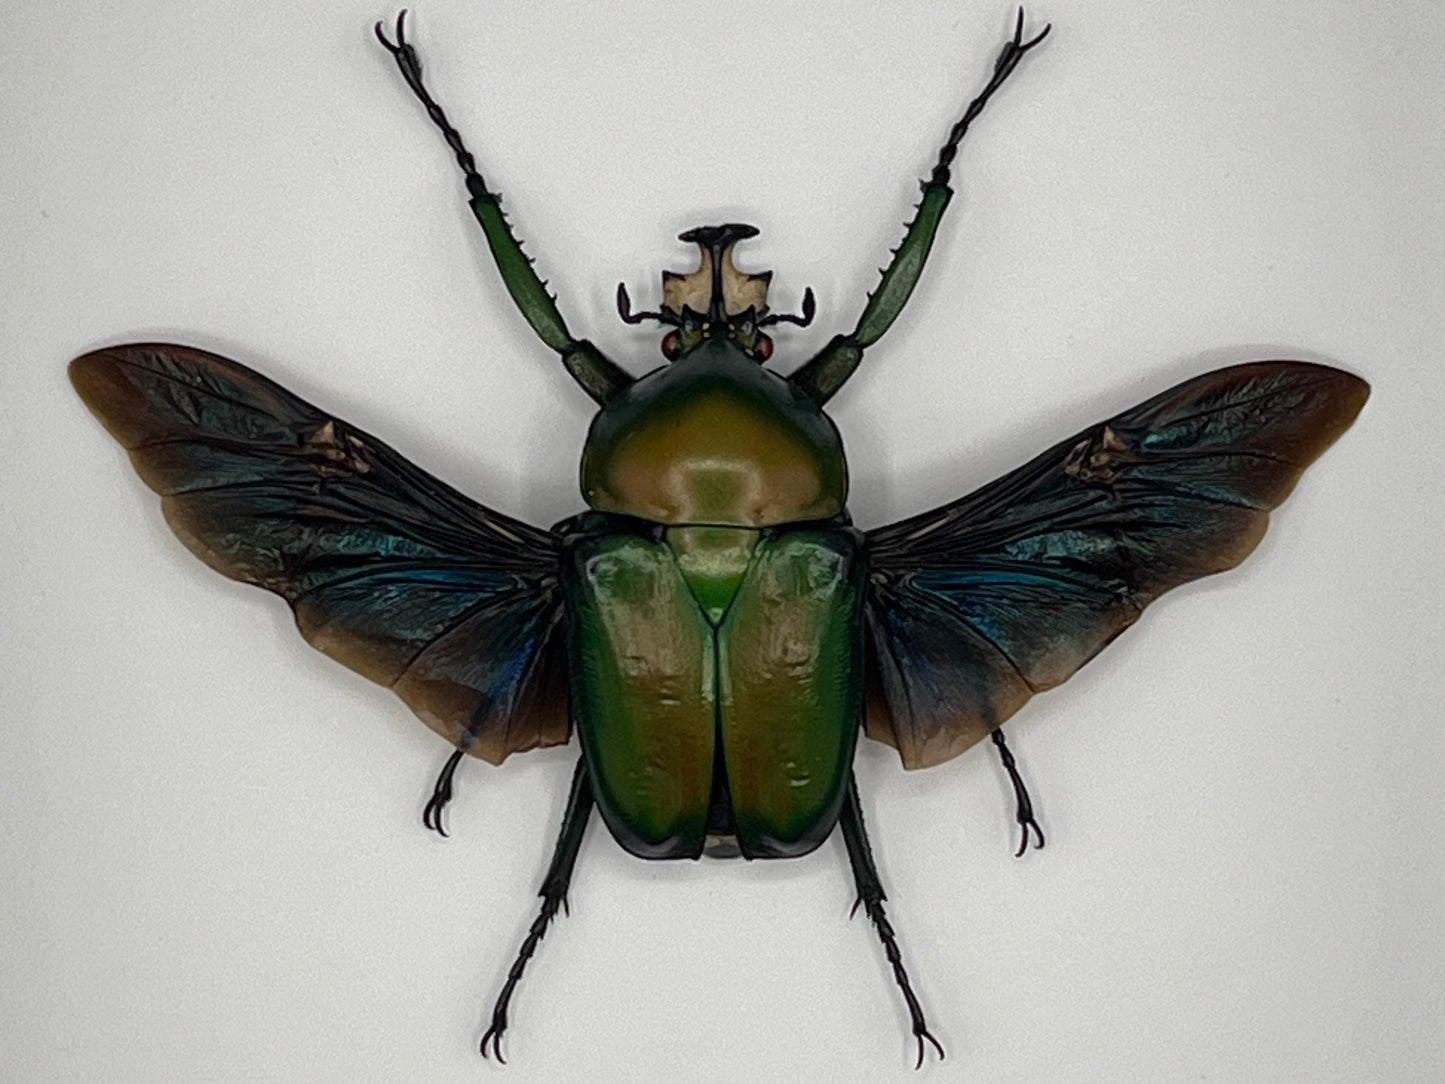 Beetle - Dicronorhina derbyana oberthuri